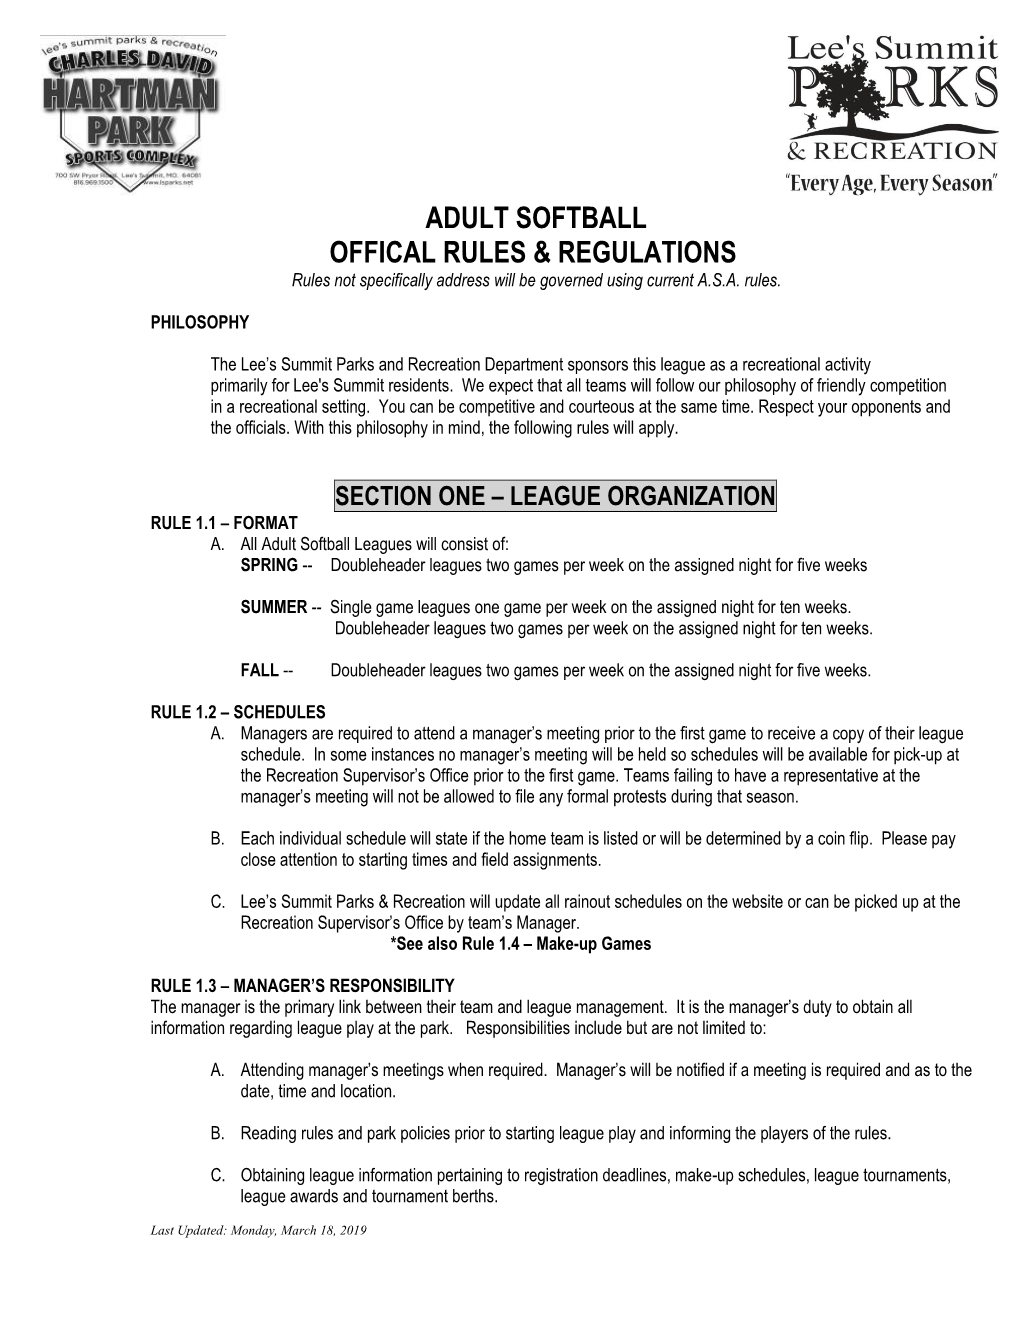 League Organization Rule 1.1 – Format A